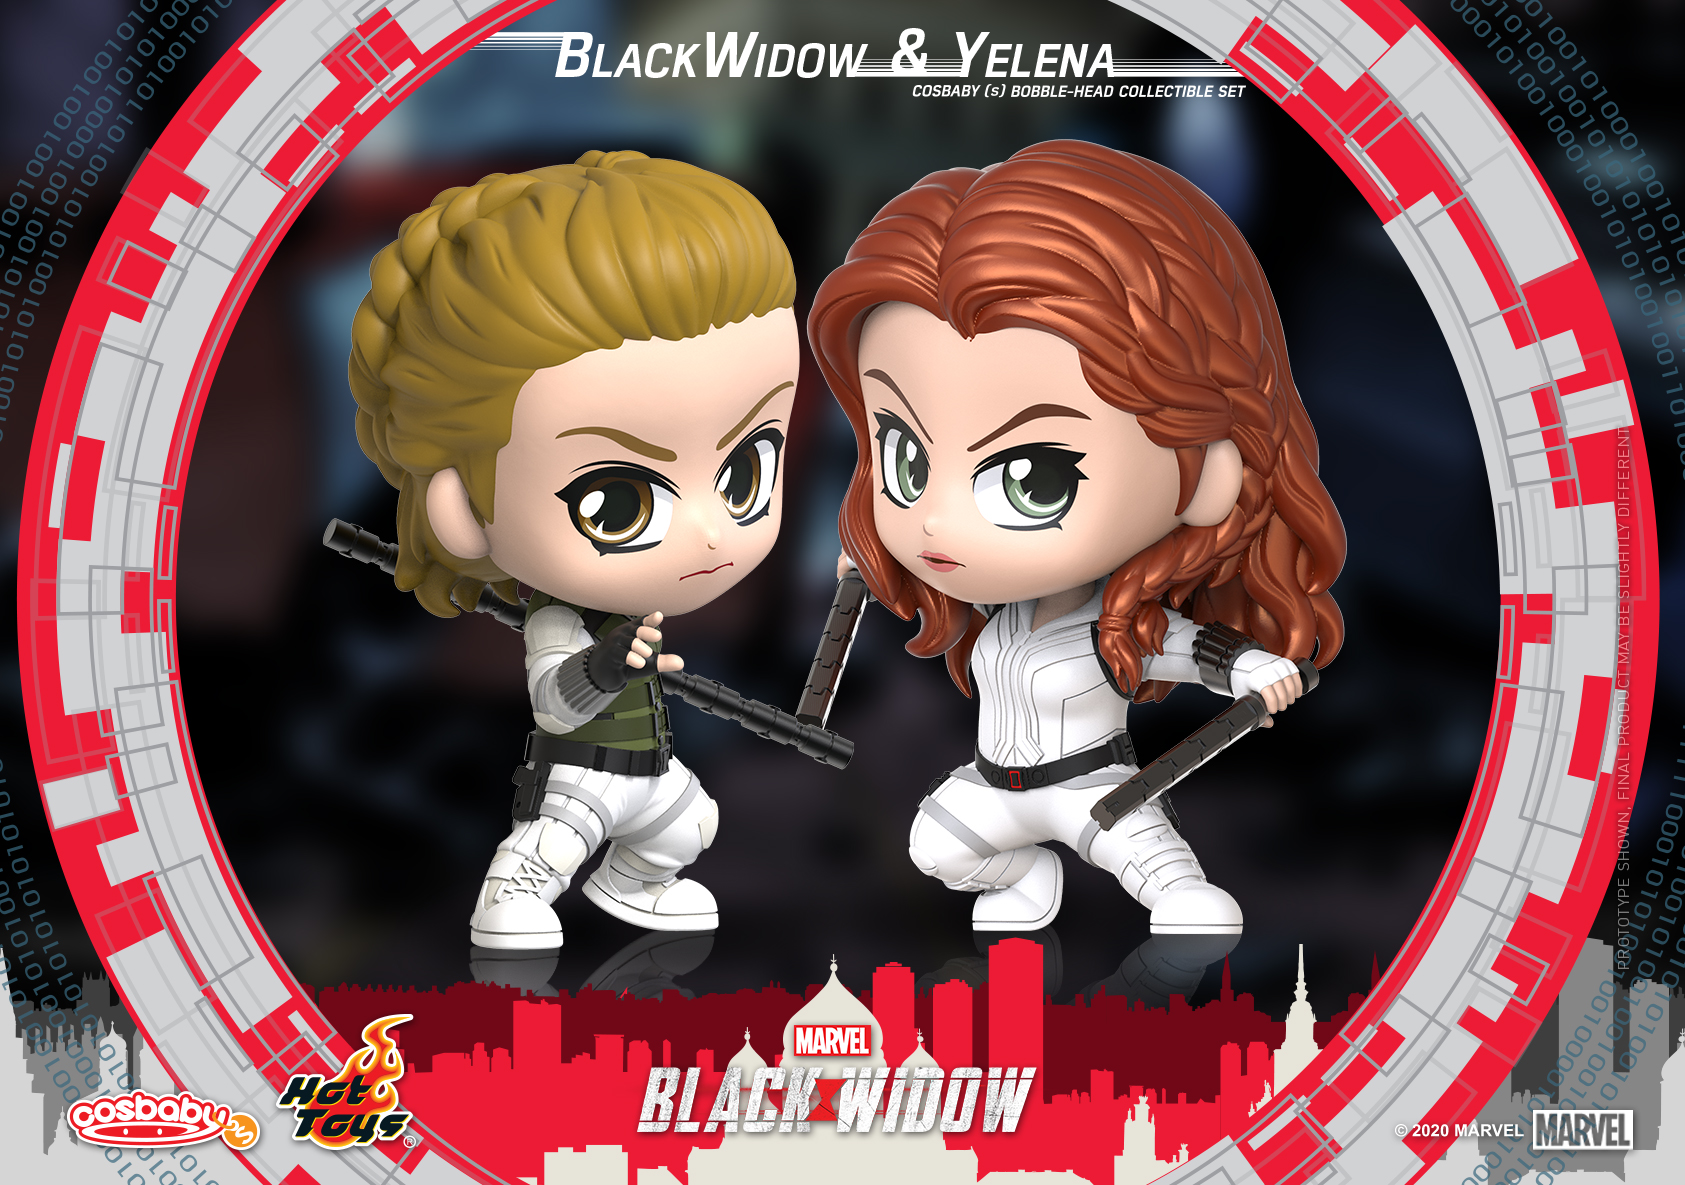 Hot Toys - Black Widow - Black Widow & Yelena Cosbaby (S) Bobble-Head Collectible Set_PR2